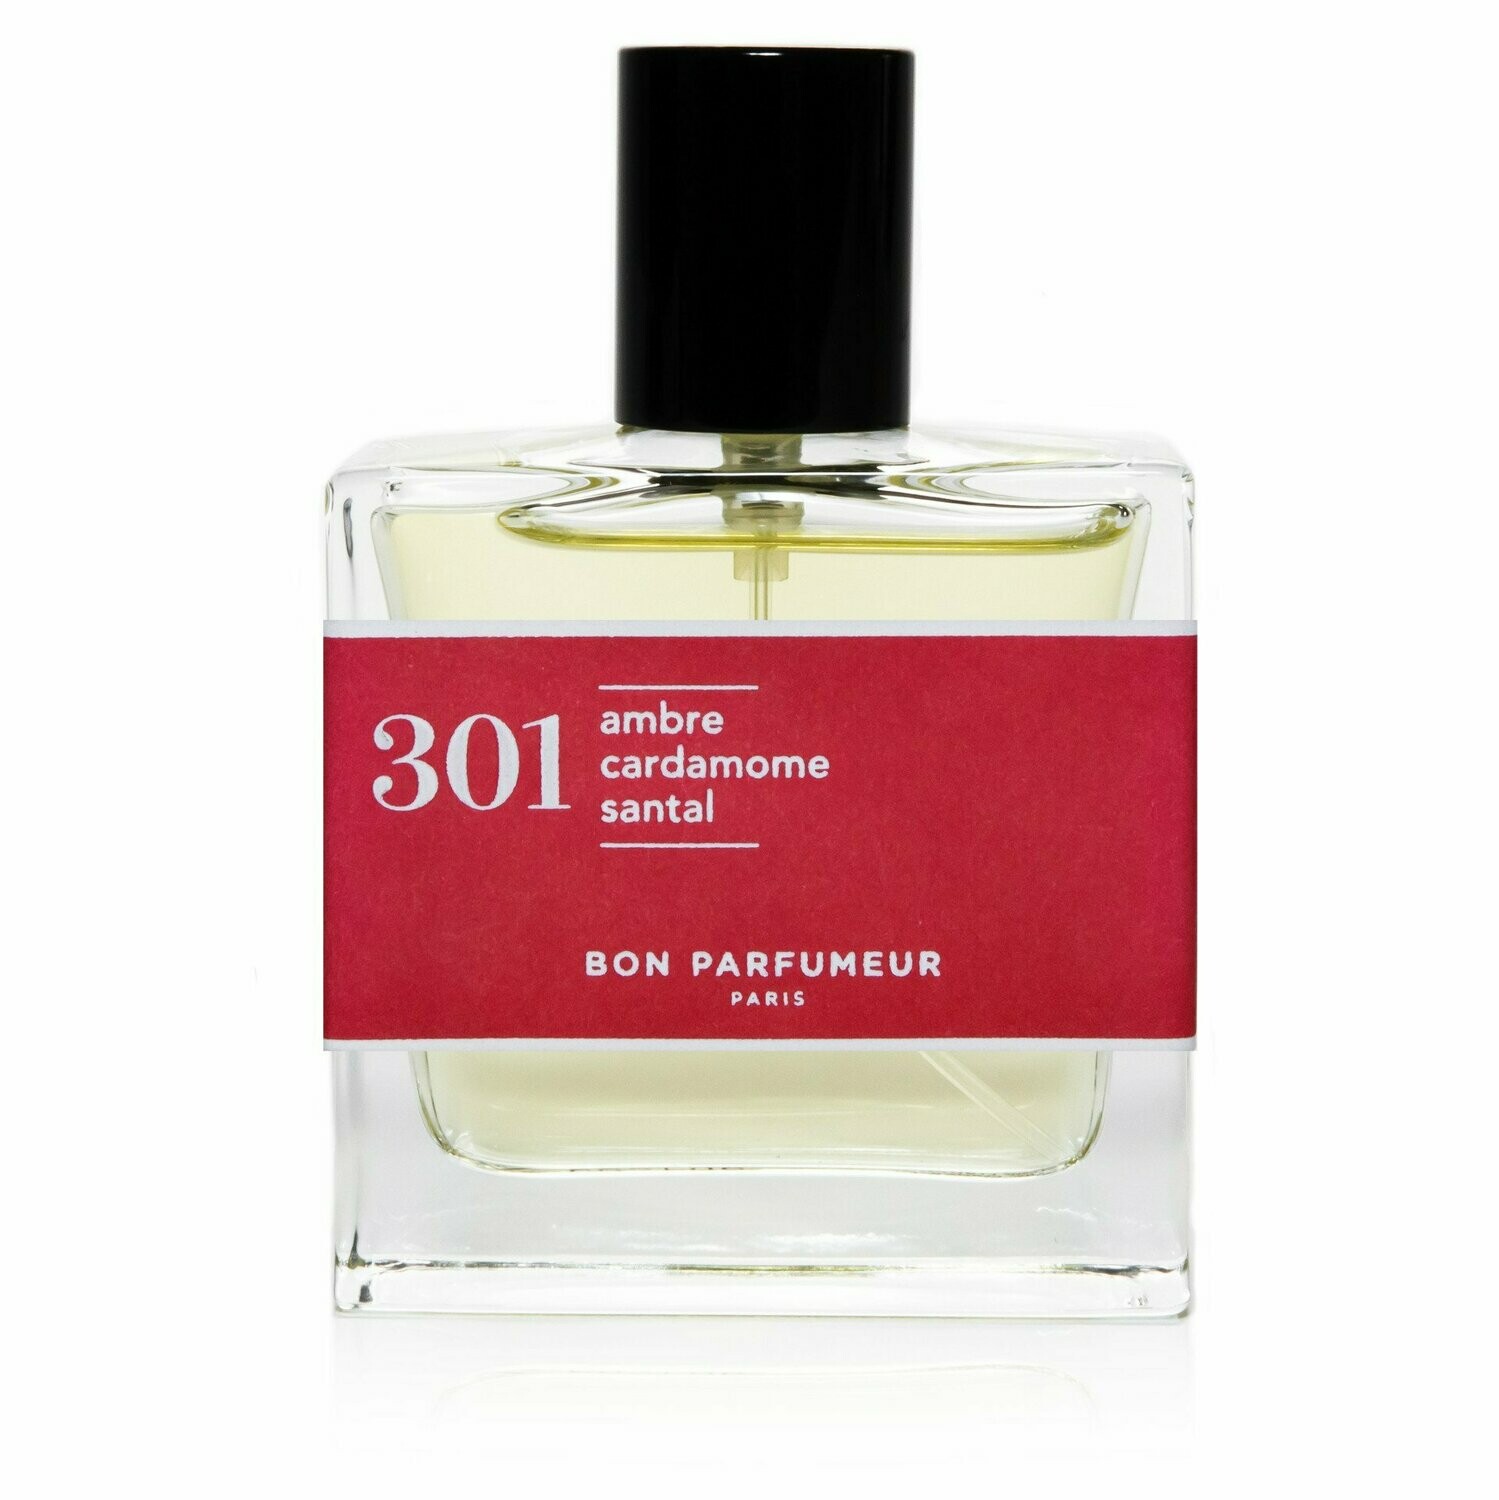 Bon Parfumeur - 301 : Sandalwood / Amber / Cardamom Eau de Parfum 30ml
Sandelholz, Amber, Kardamom